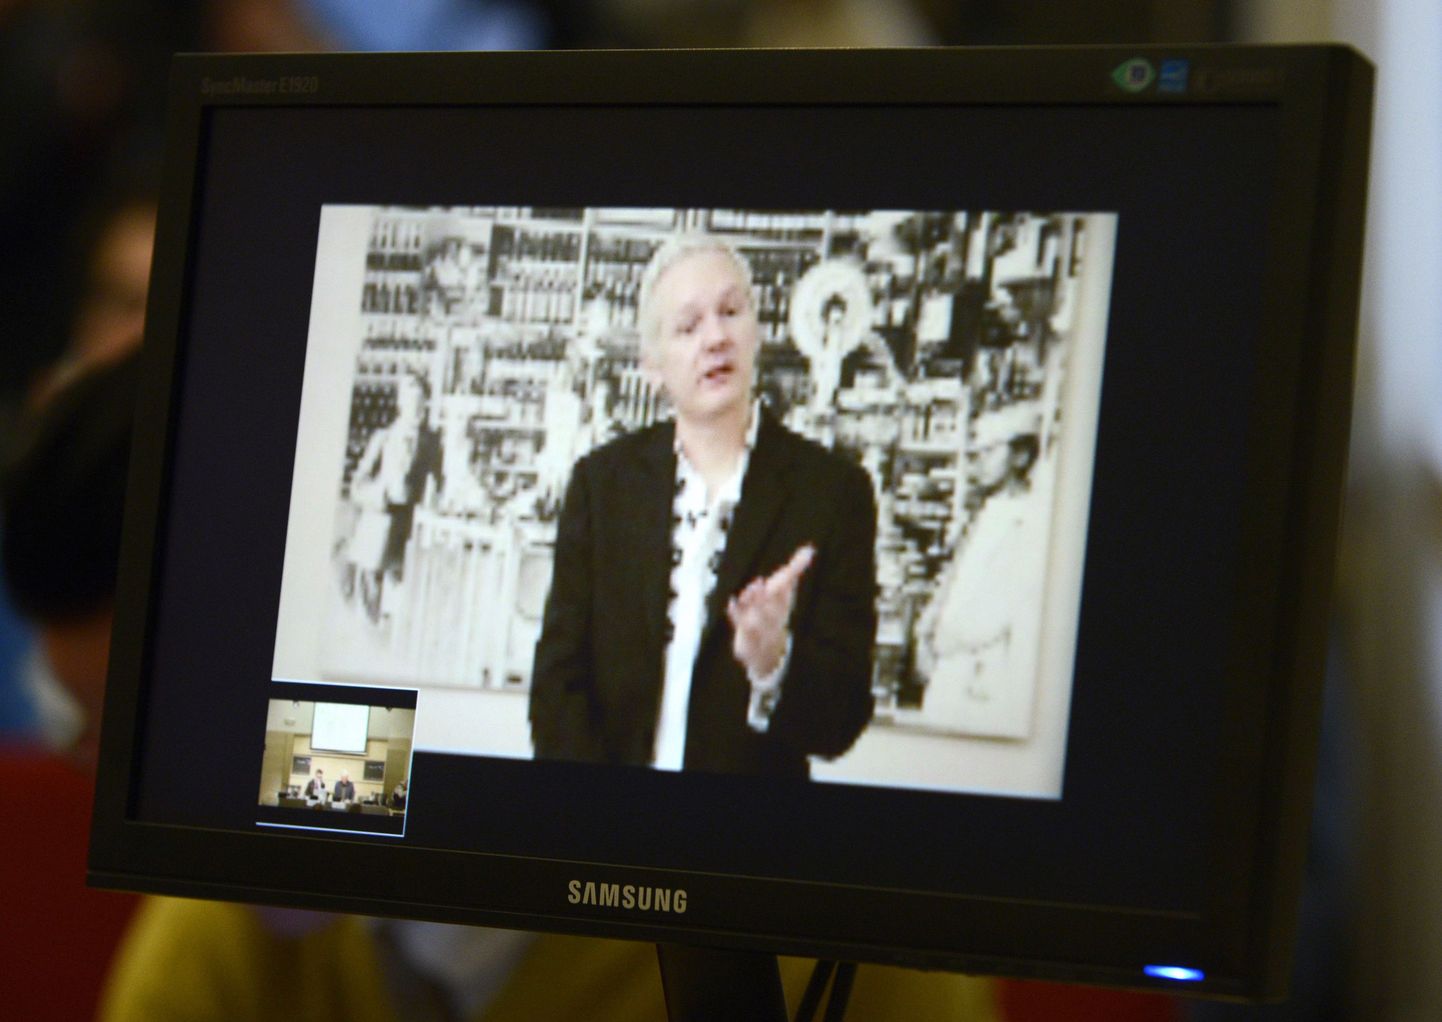 Wikileaksi asutaja Julian Assange osales pressikonverentsil videosilla vahendusel.